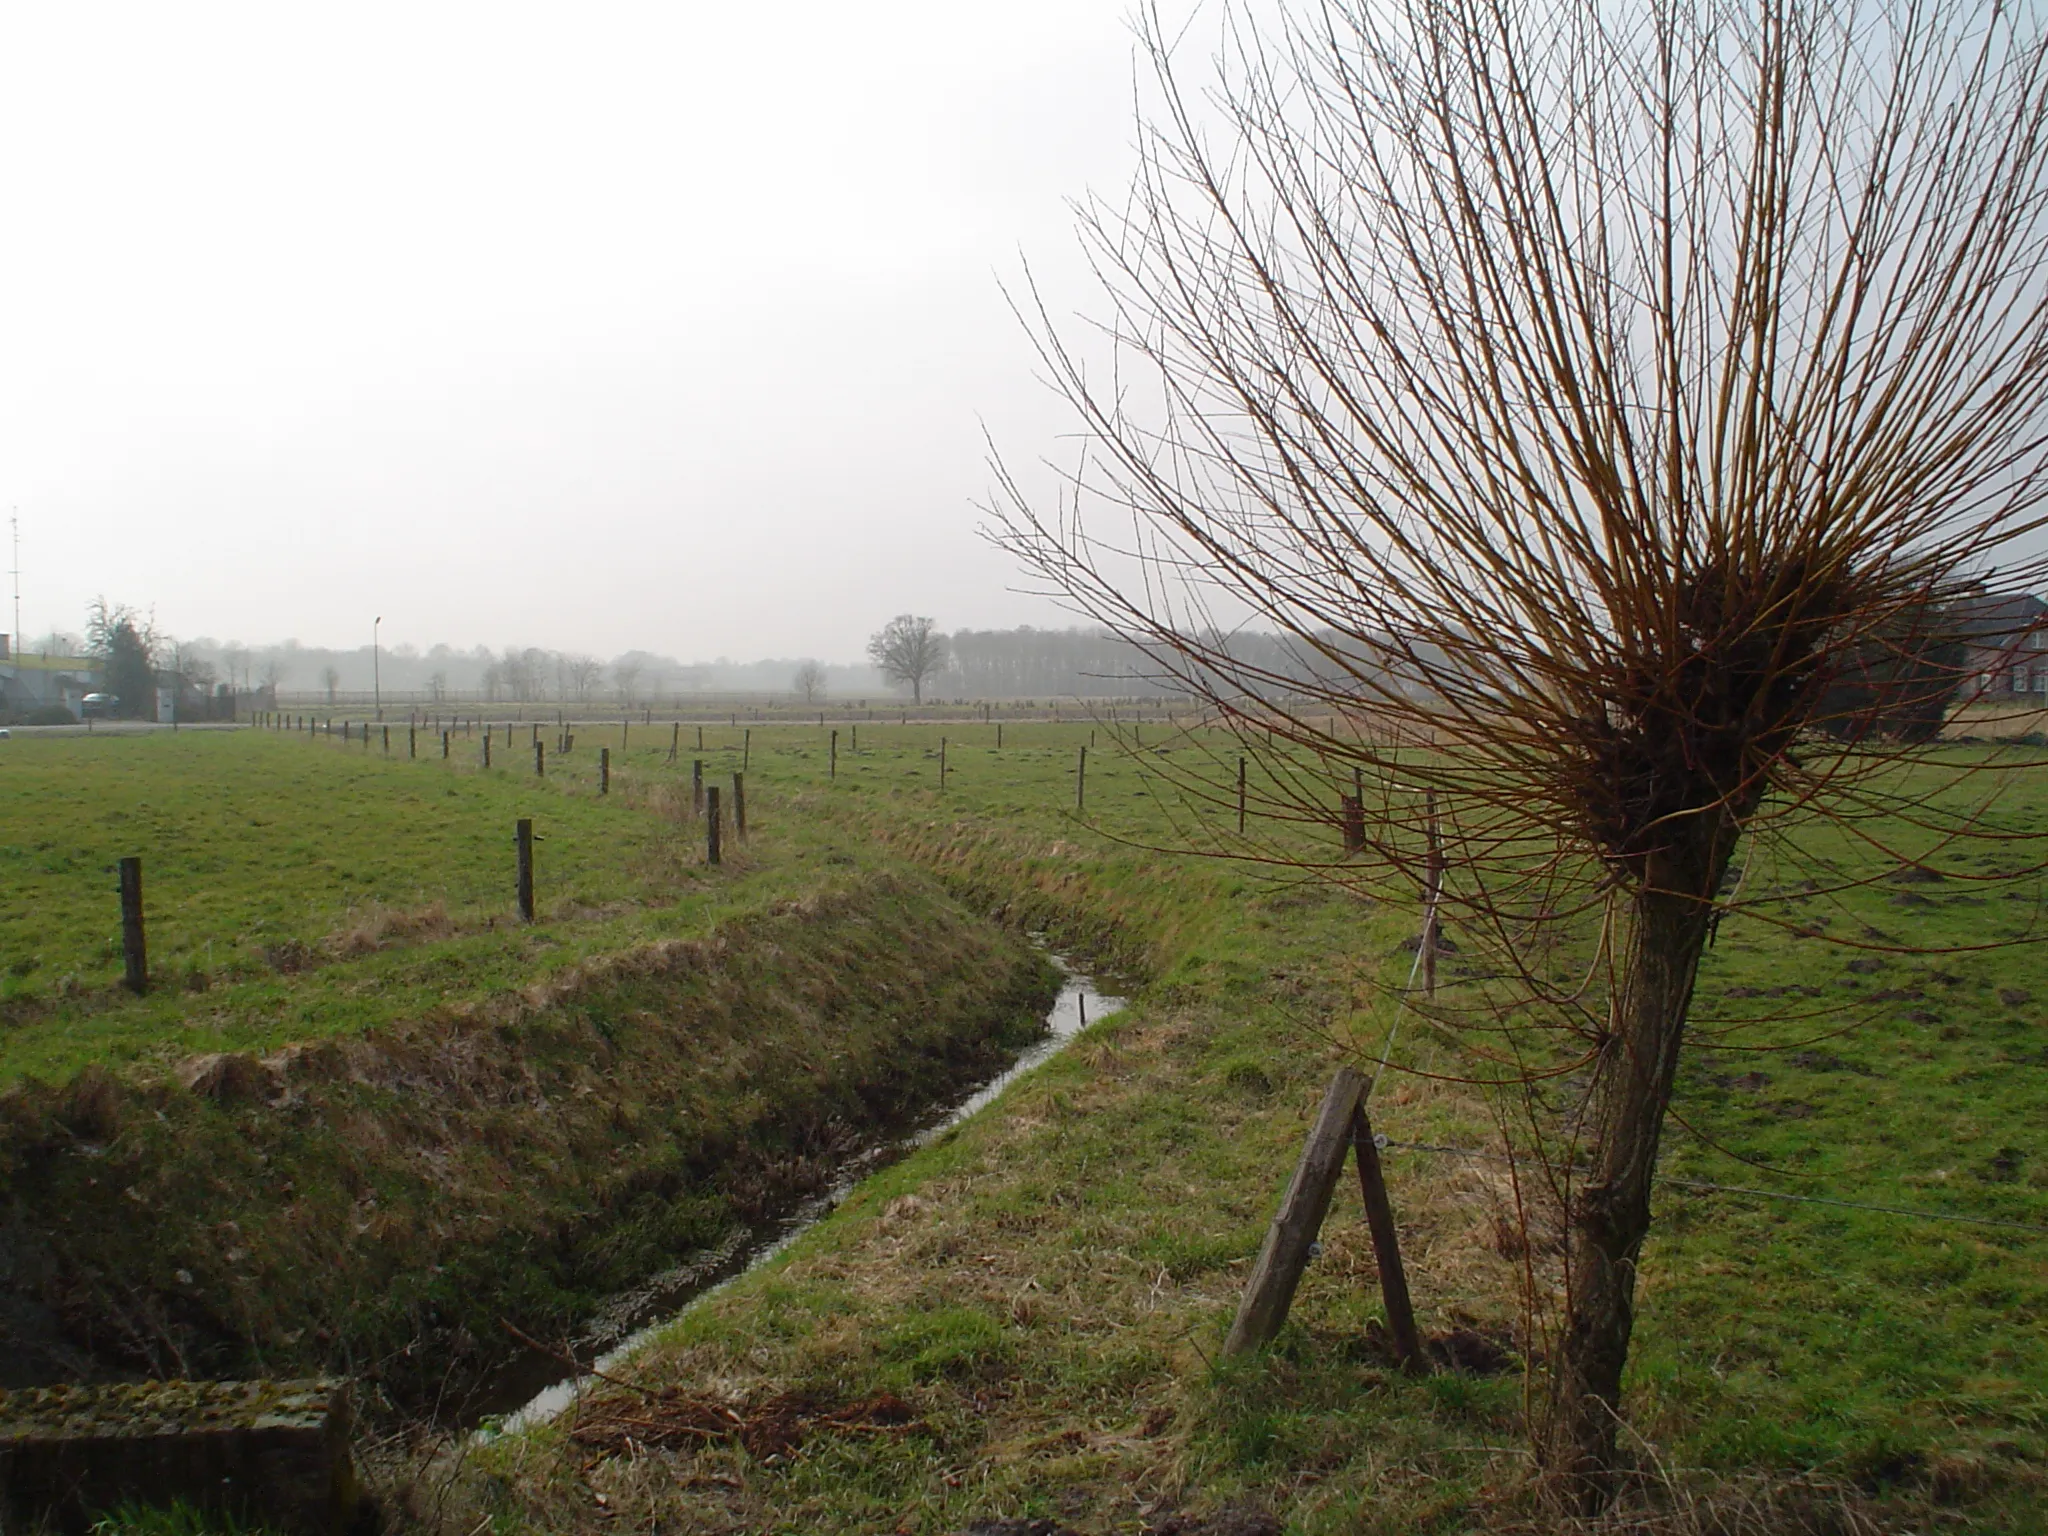 Photo showing: The stream Poelenloop, near the Knegselseweg in Veldhoven, Netherlands